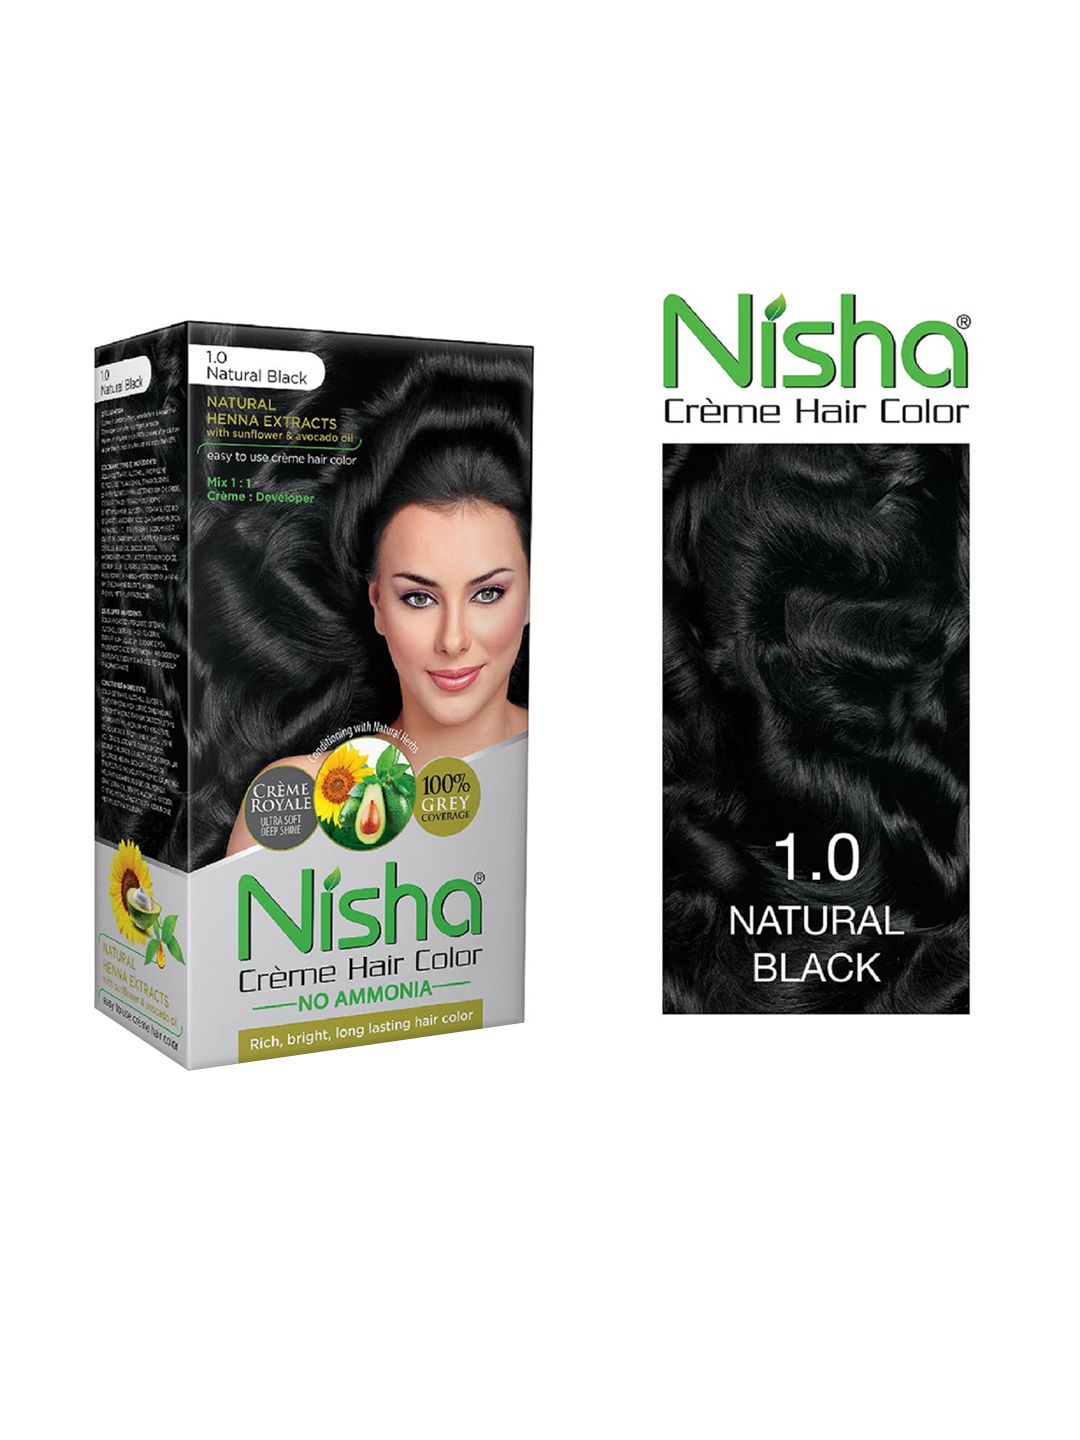 Nisha Unisex Black Creme Hair Color 120gm each- Natural Black Price in India